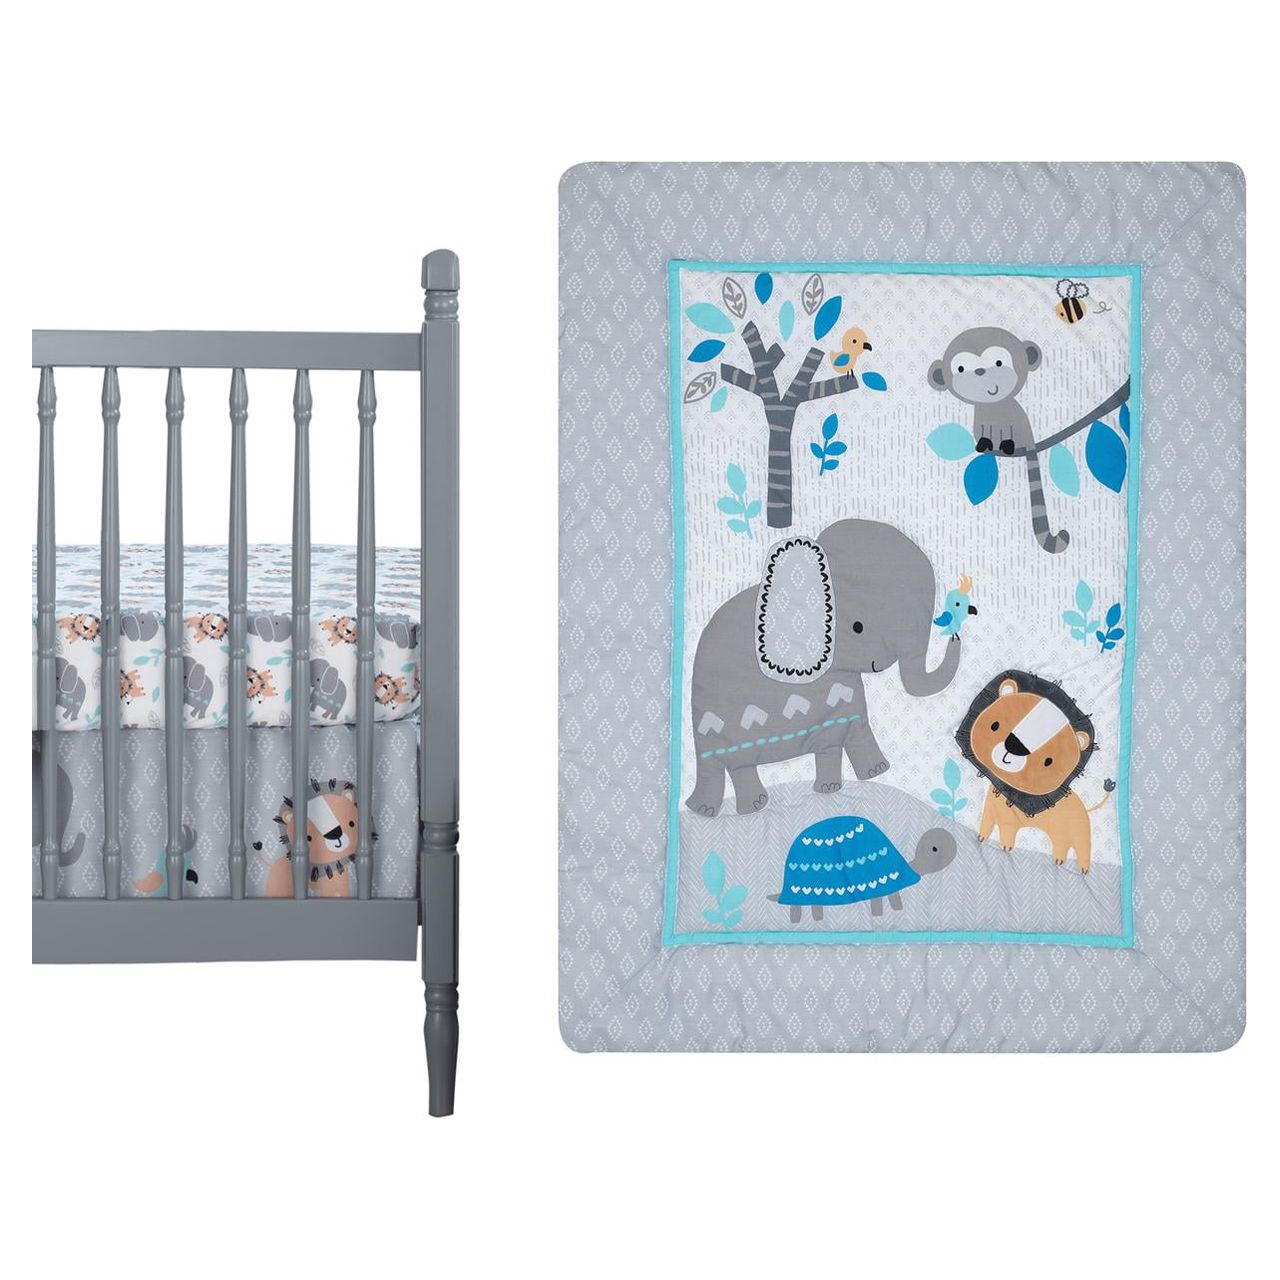 Bedtime Originals Jungle Fun 3-Piece Animals Crib Bedding Set - Blue, Gray, White - image 1 of 7